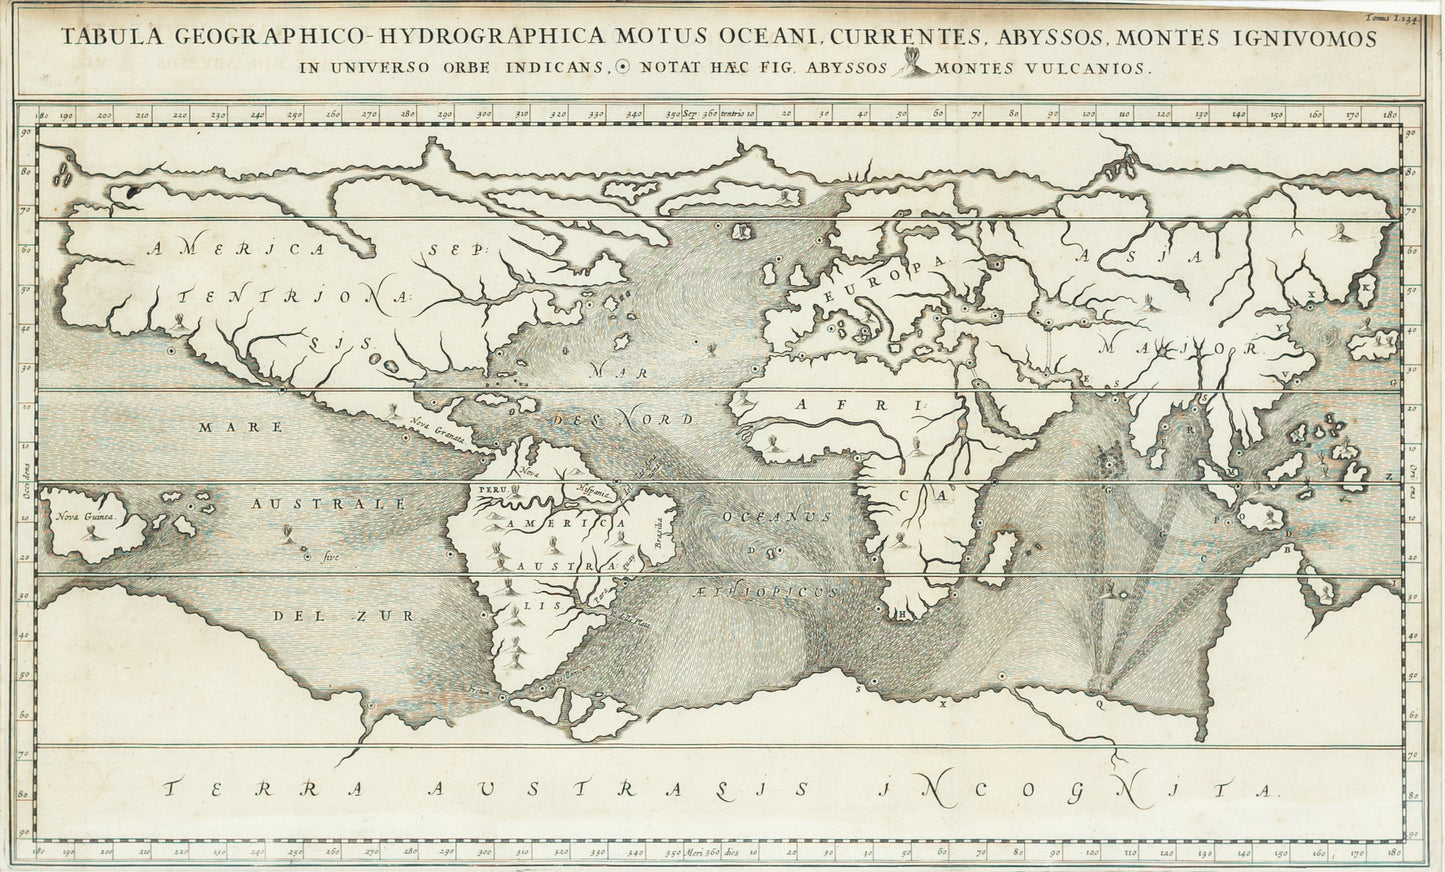 Kircher, Athanasius. Tabula Geographico-Hydrographica Motus Oceani, Currentes, Abyssos, Montes Ignivomos. Amsterdam, 1665.